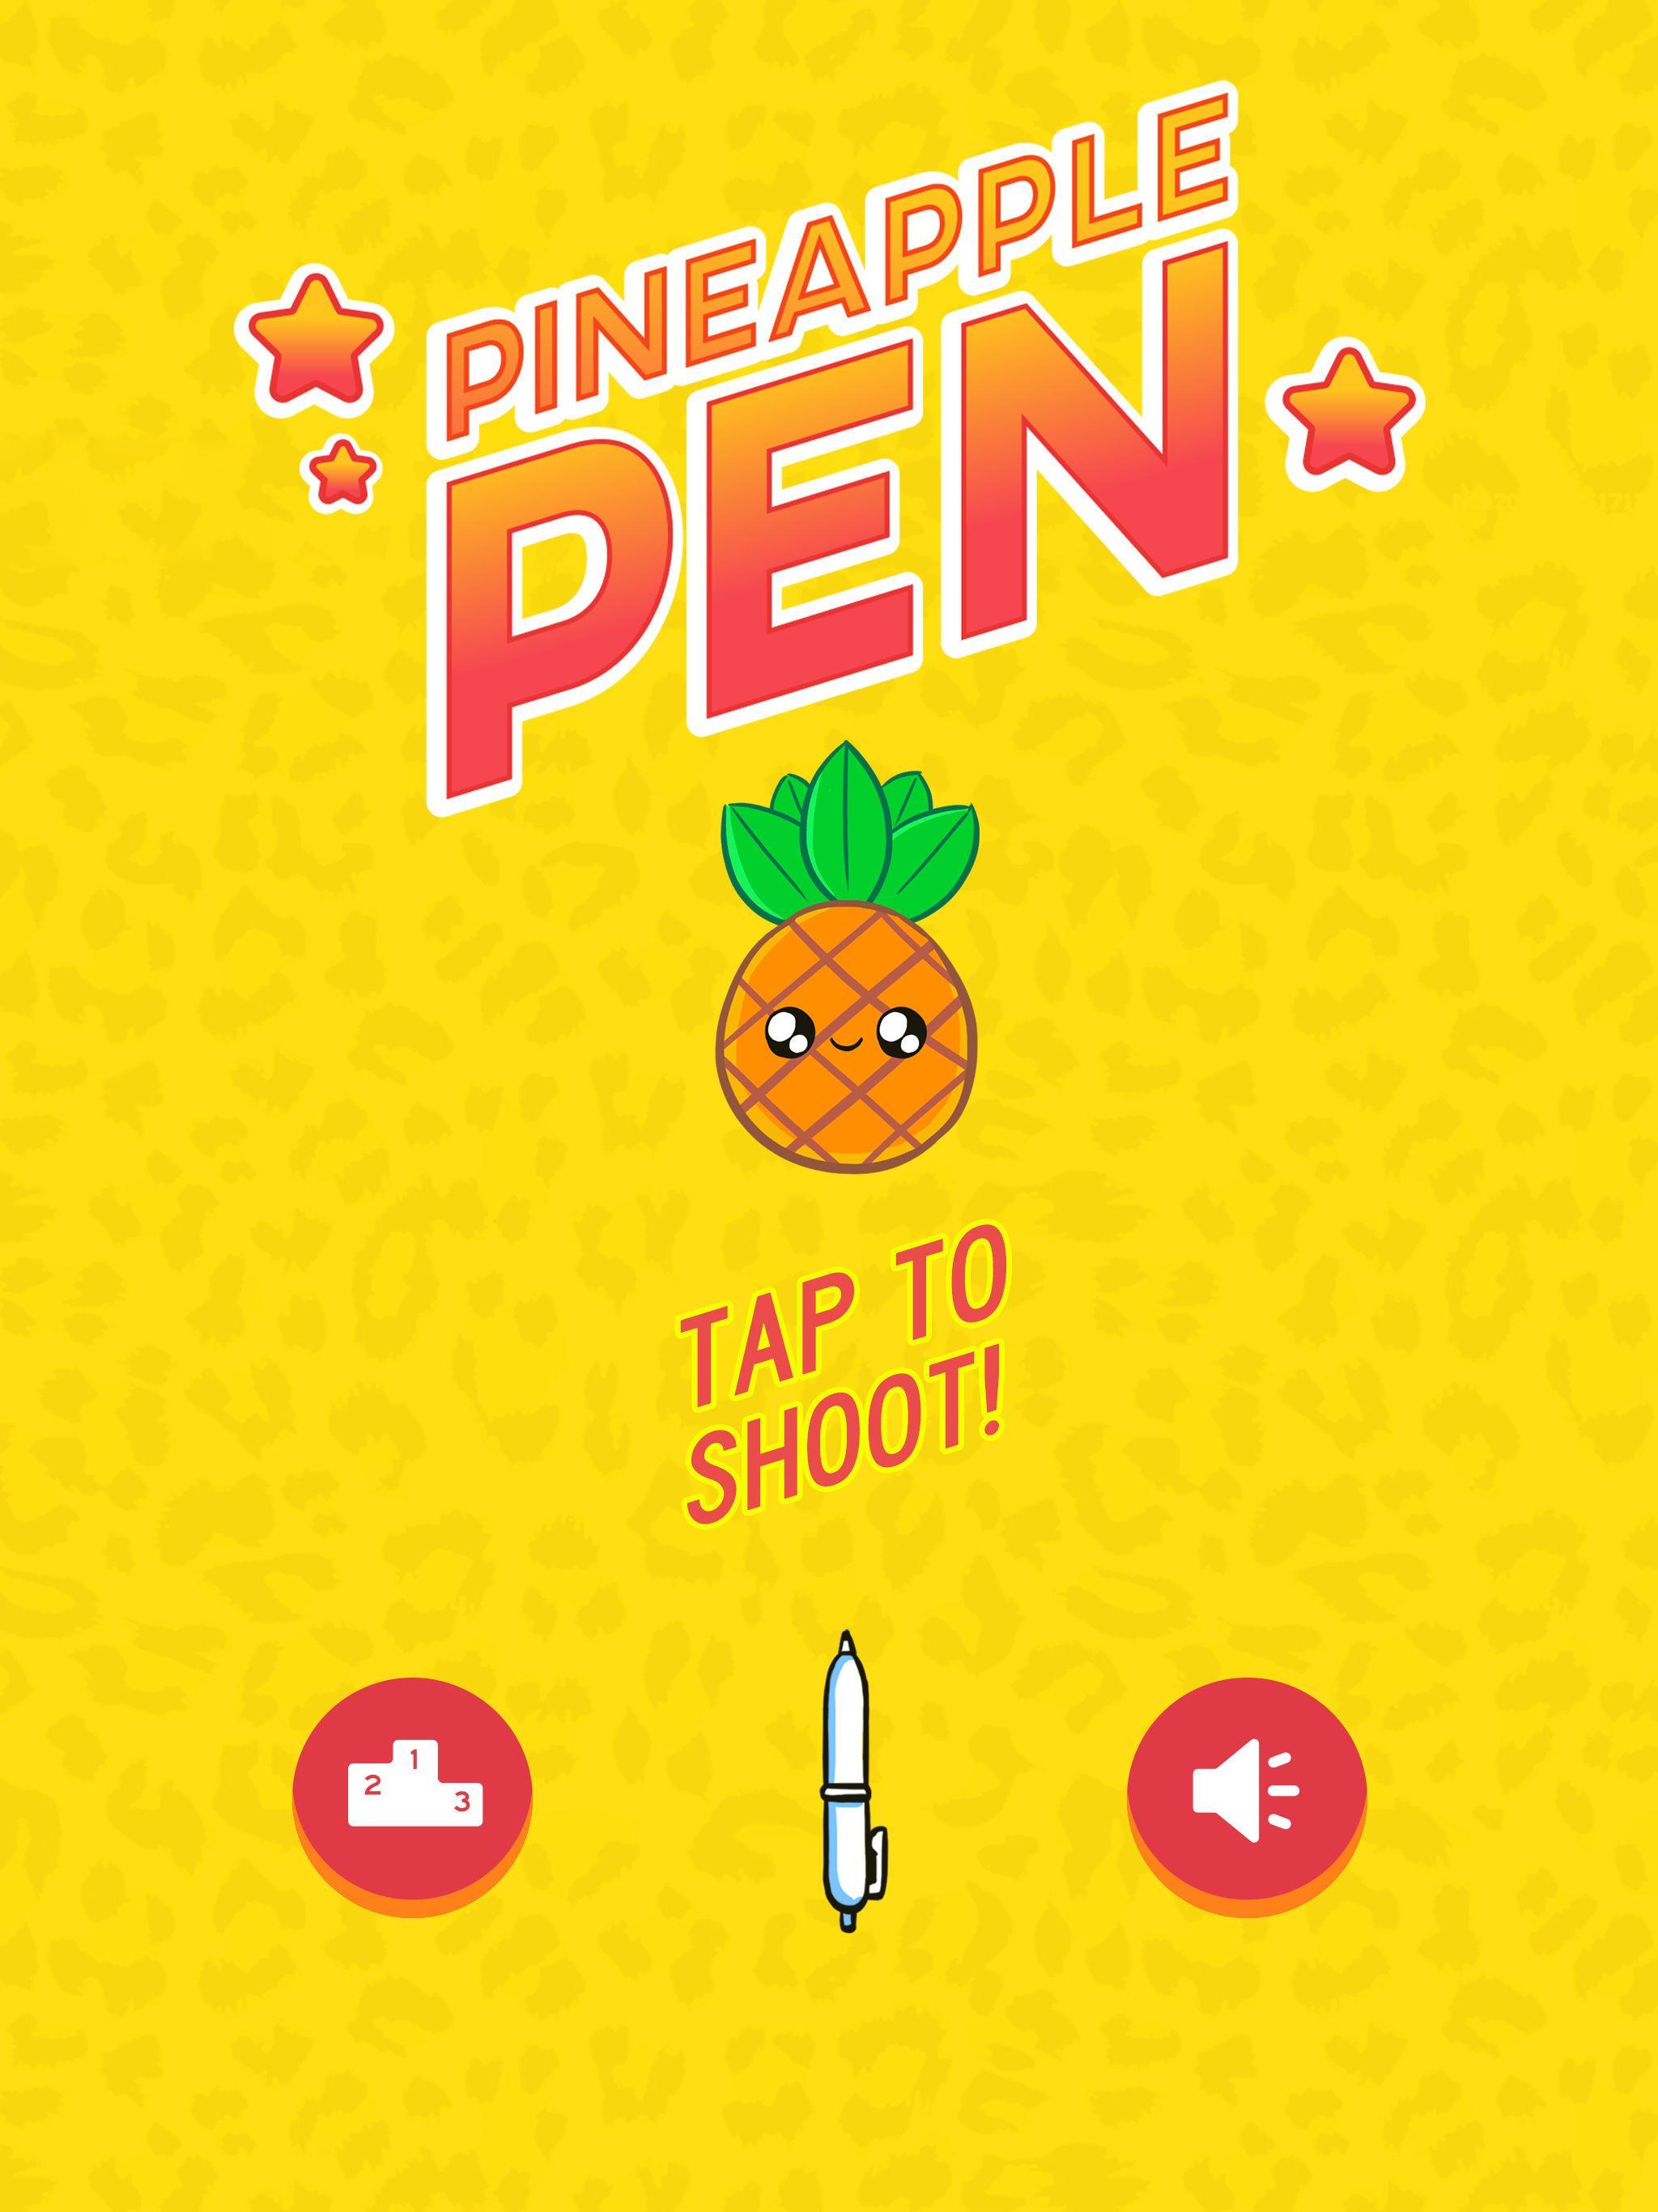 Screenshot of Pineapple Pen